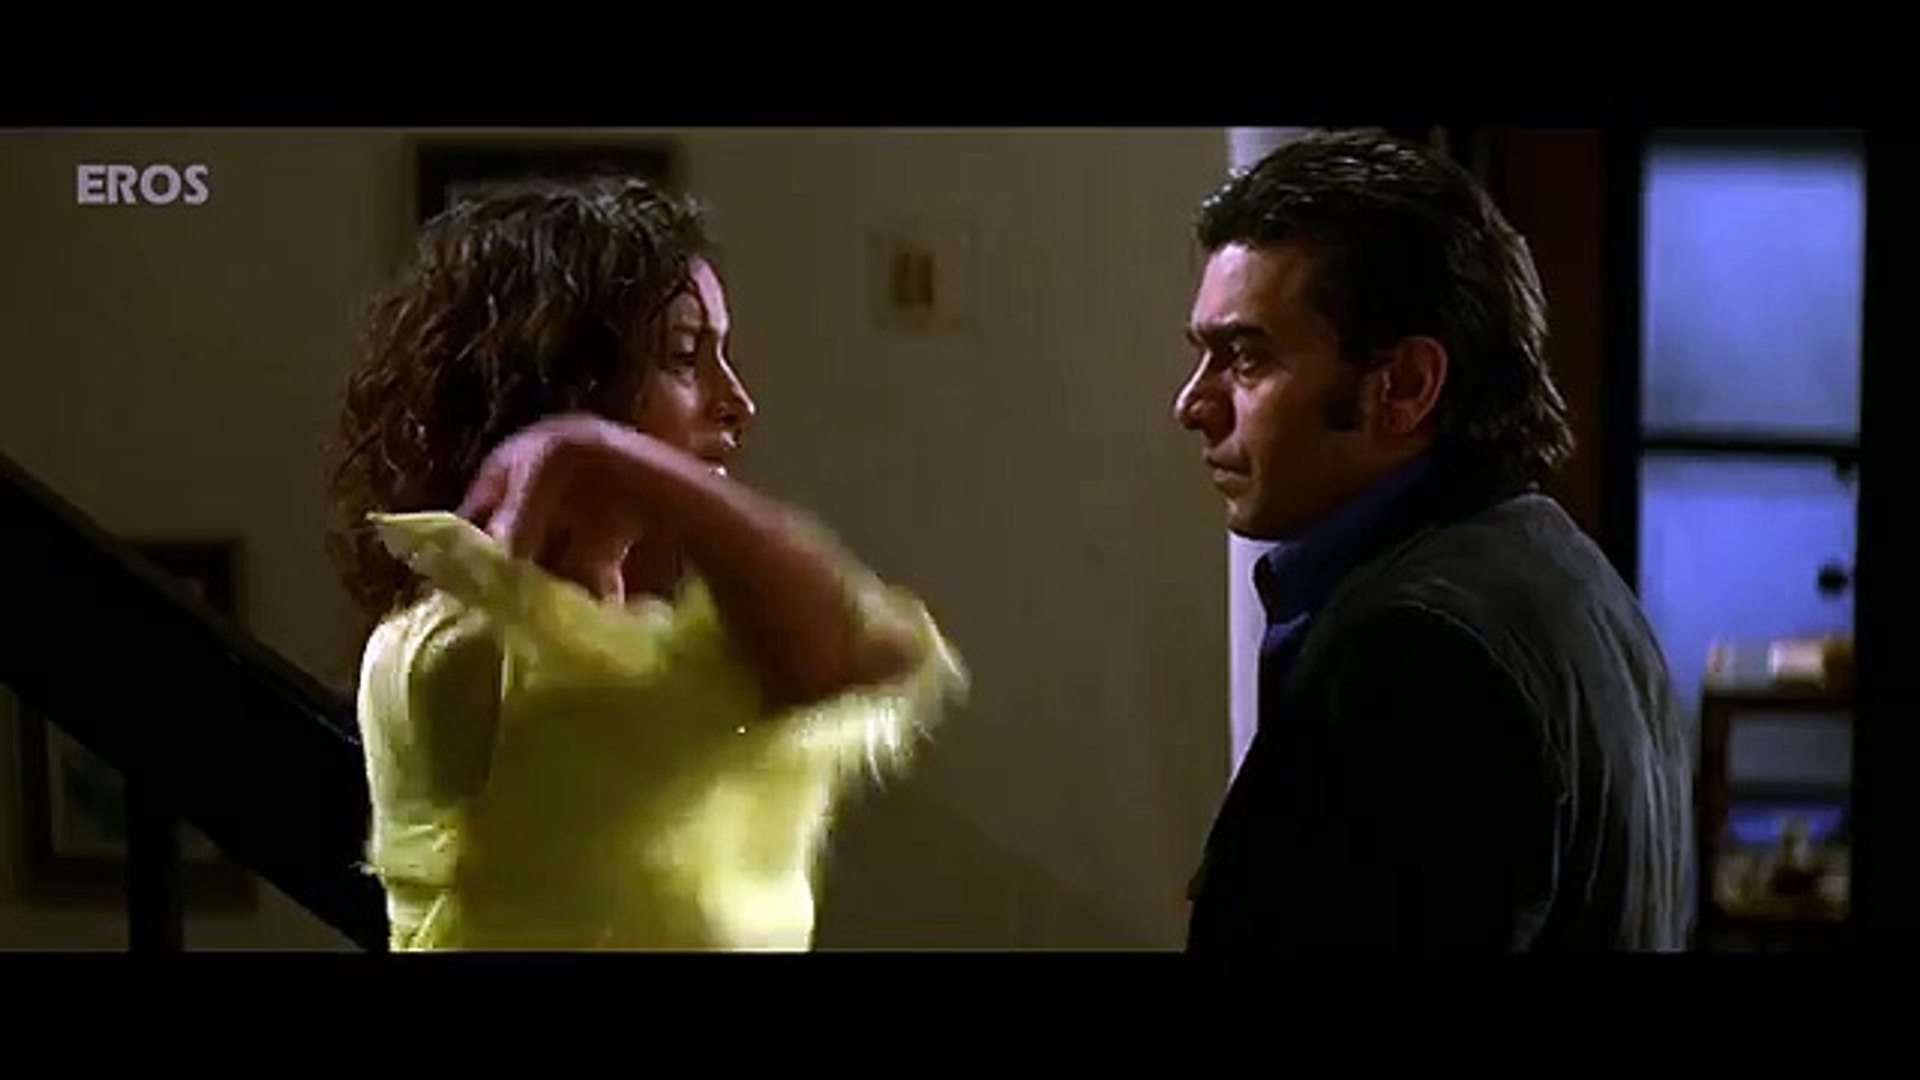 Bollywood seducing scenes